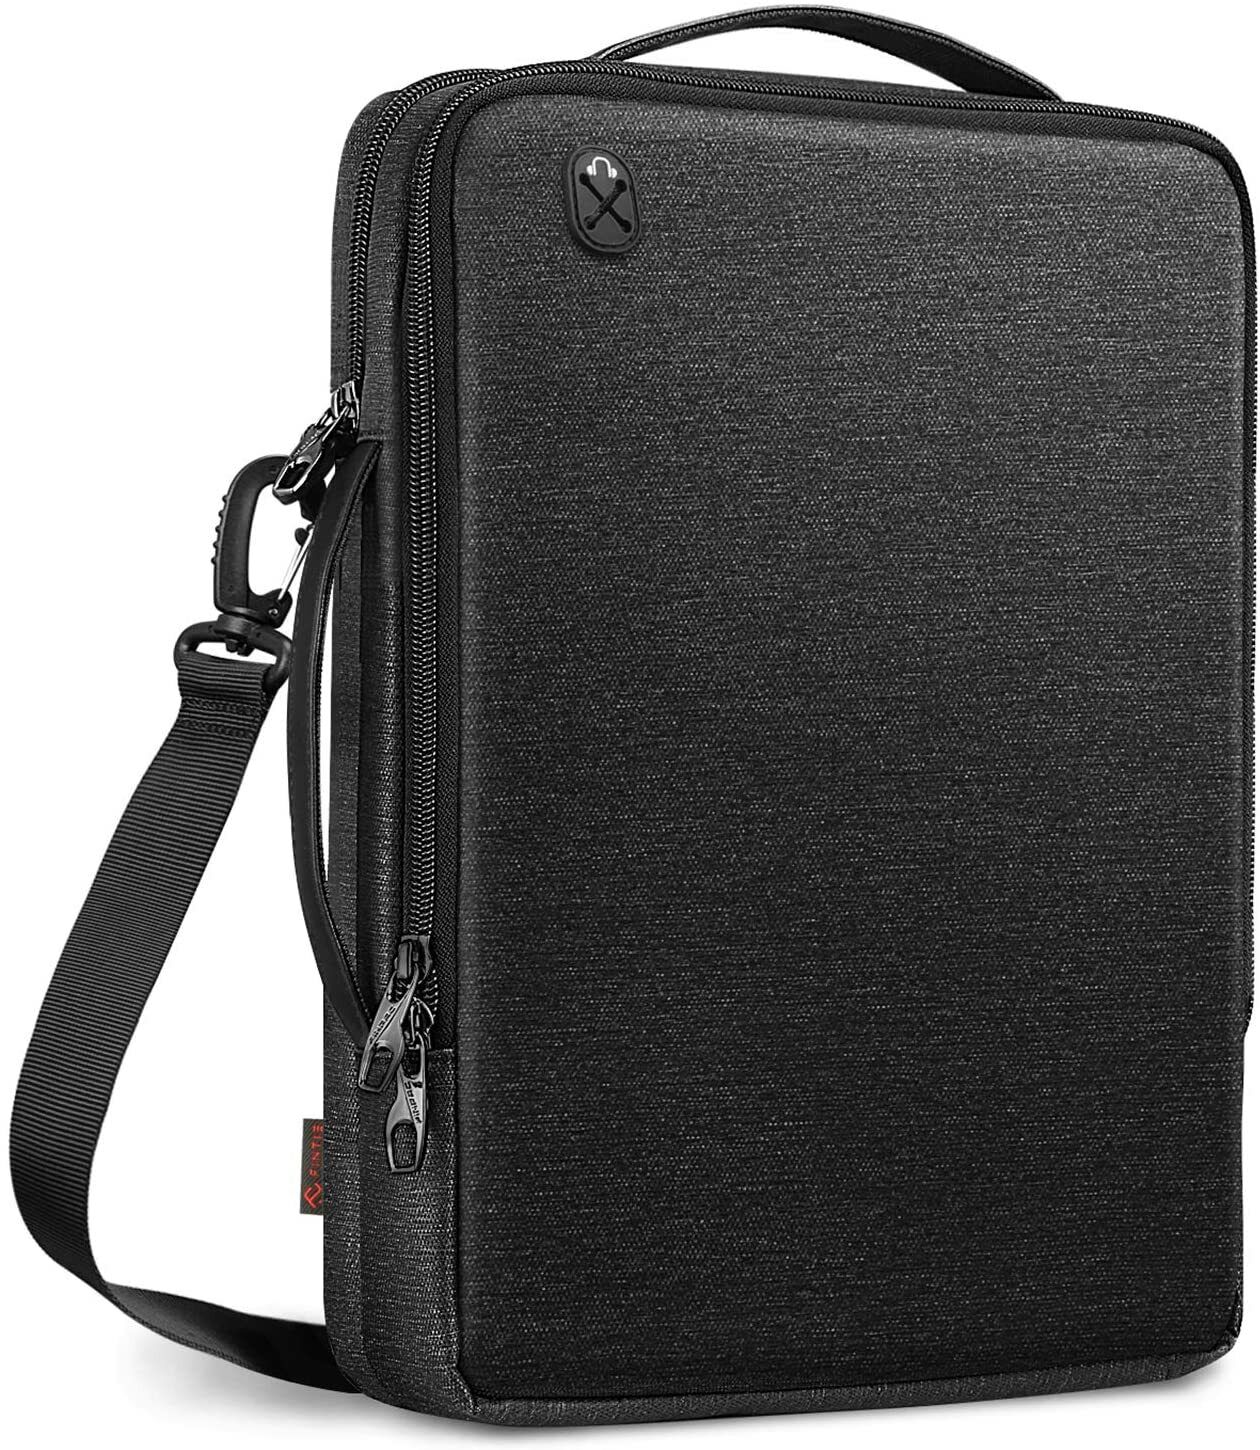 13 Inch Laptop Shoulder Bag Electronics Carrying Case for MacBook/Chromebook US